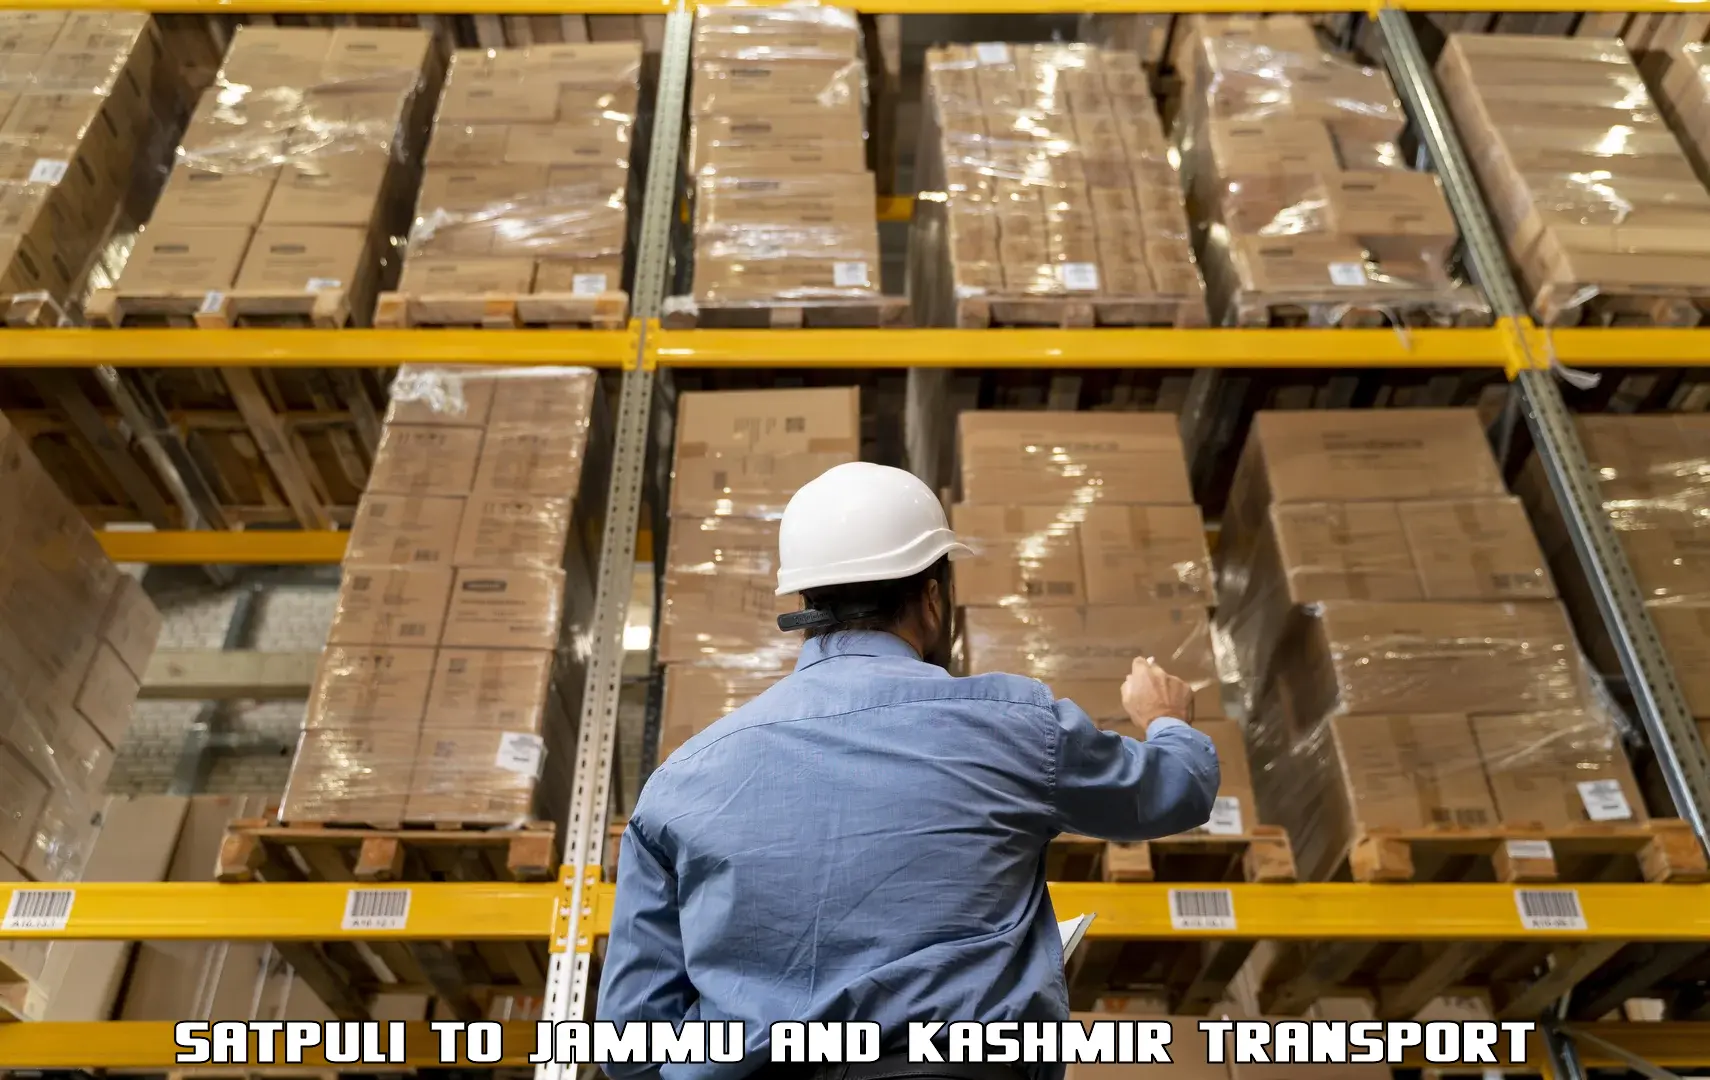 Container transport service Satpuli to Kishtwar